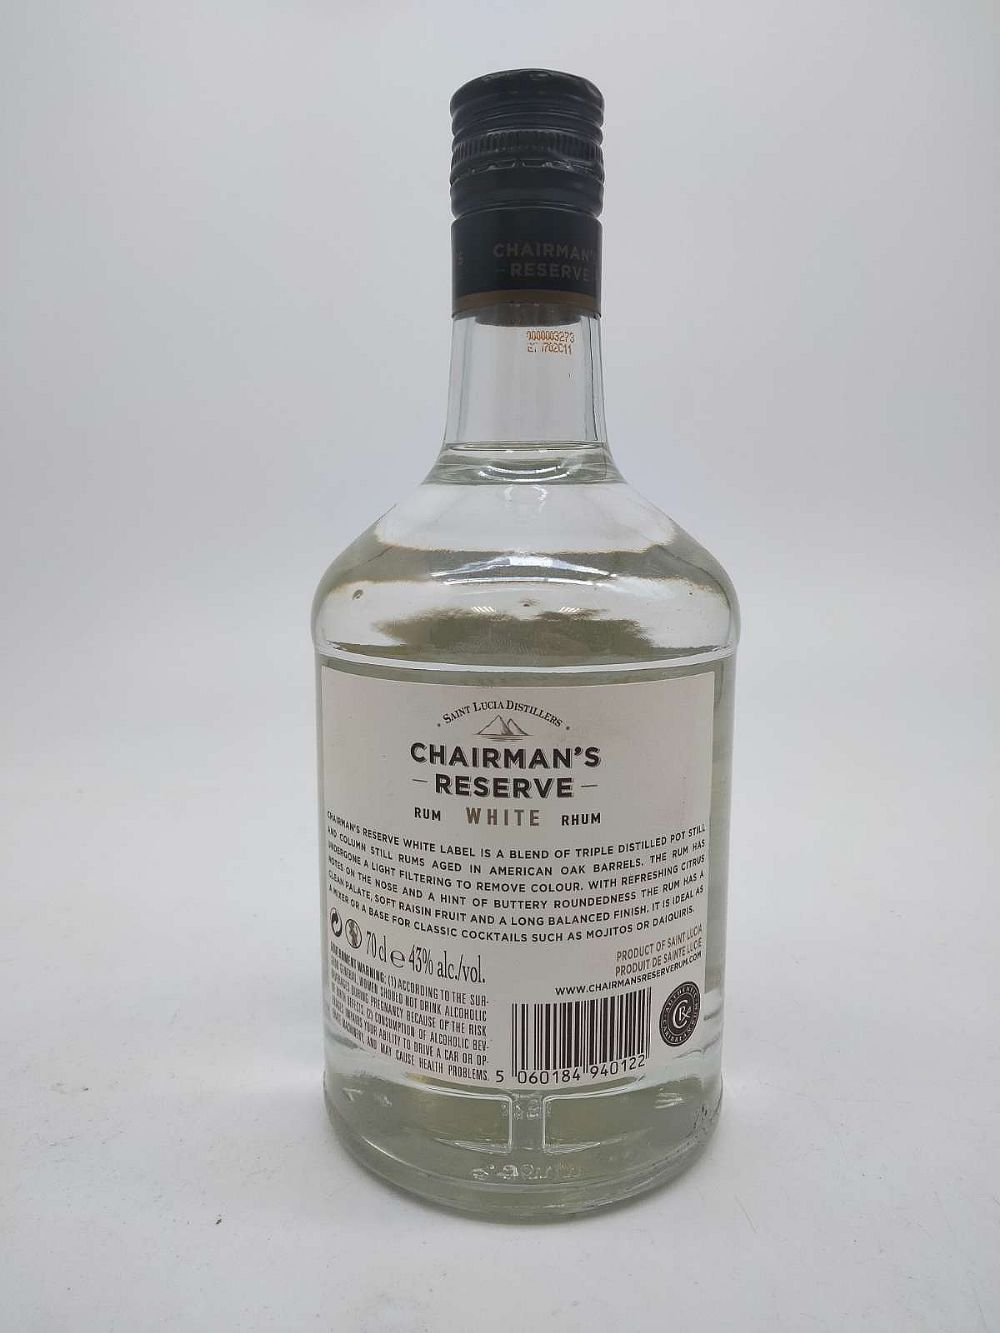 Saint Lucia Distillers Chairman's Reserve White Rum | Whiskey Bidders |  Irish Whiskey Auction Online Platform